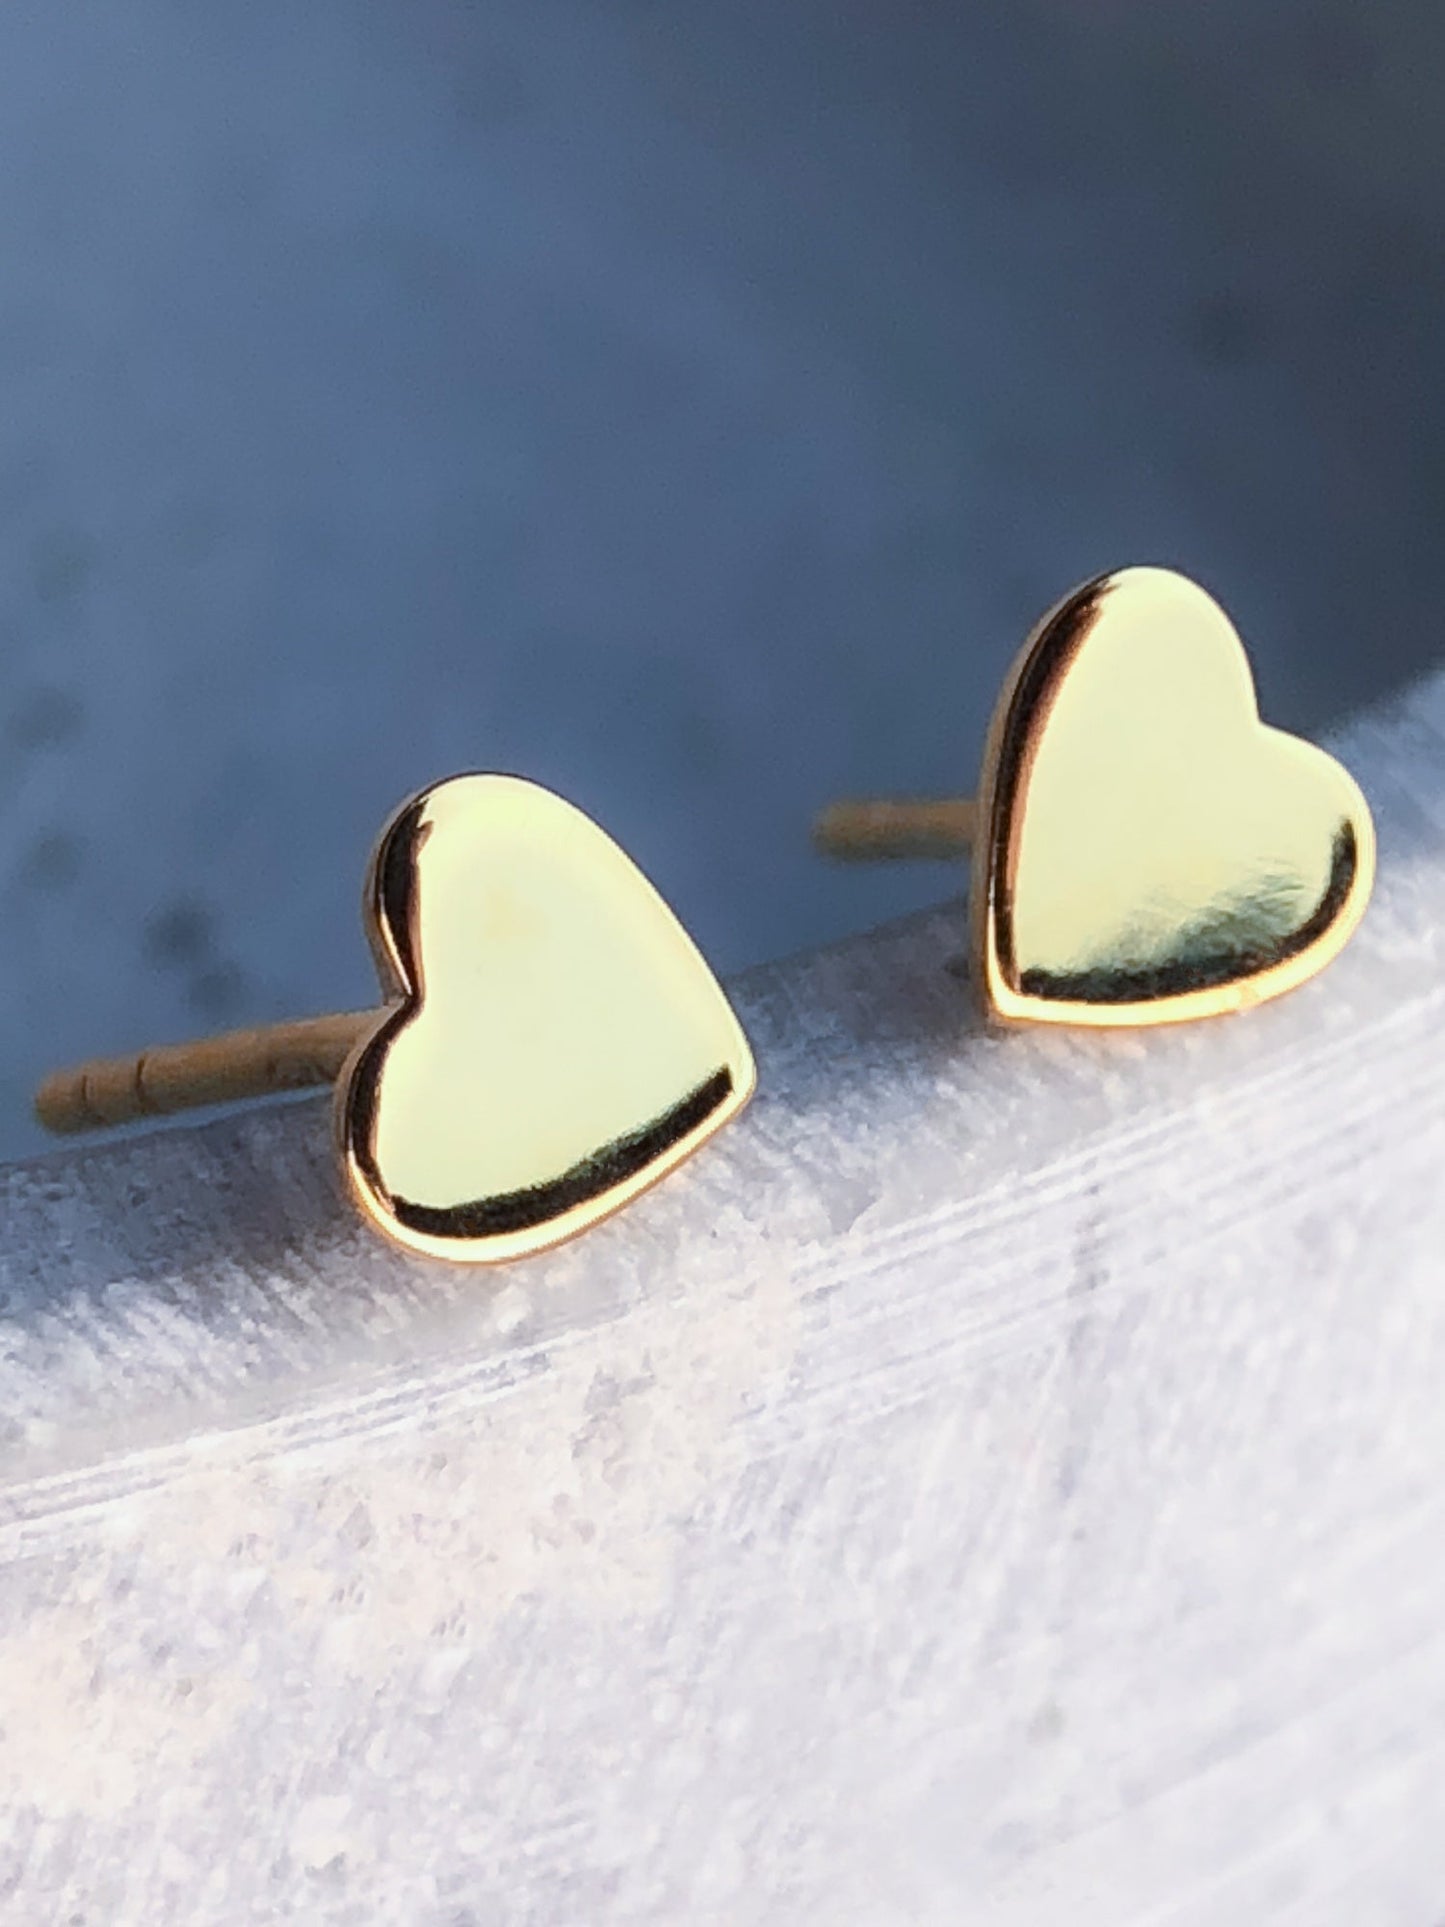 925 sterling gilded stud earrings "hearts"